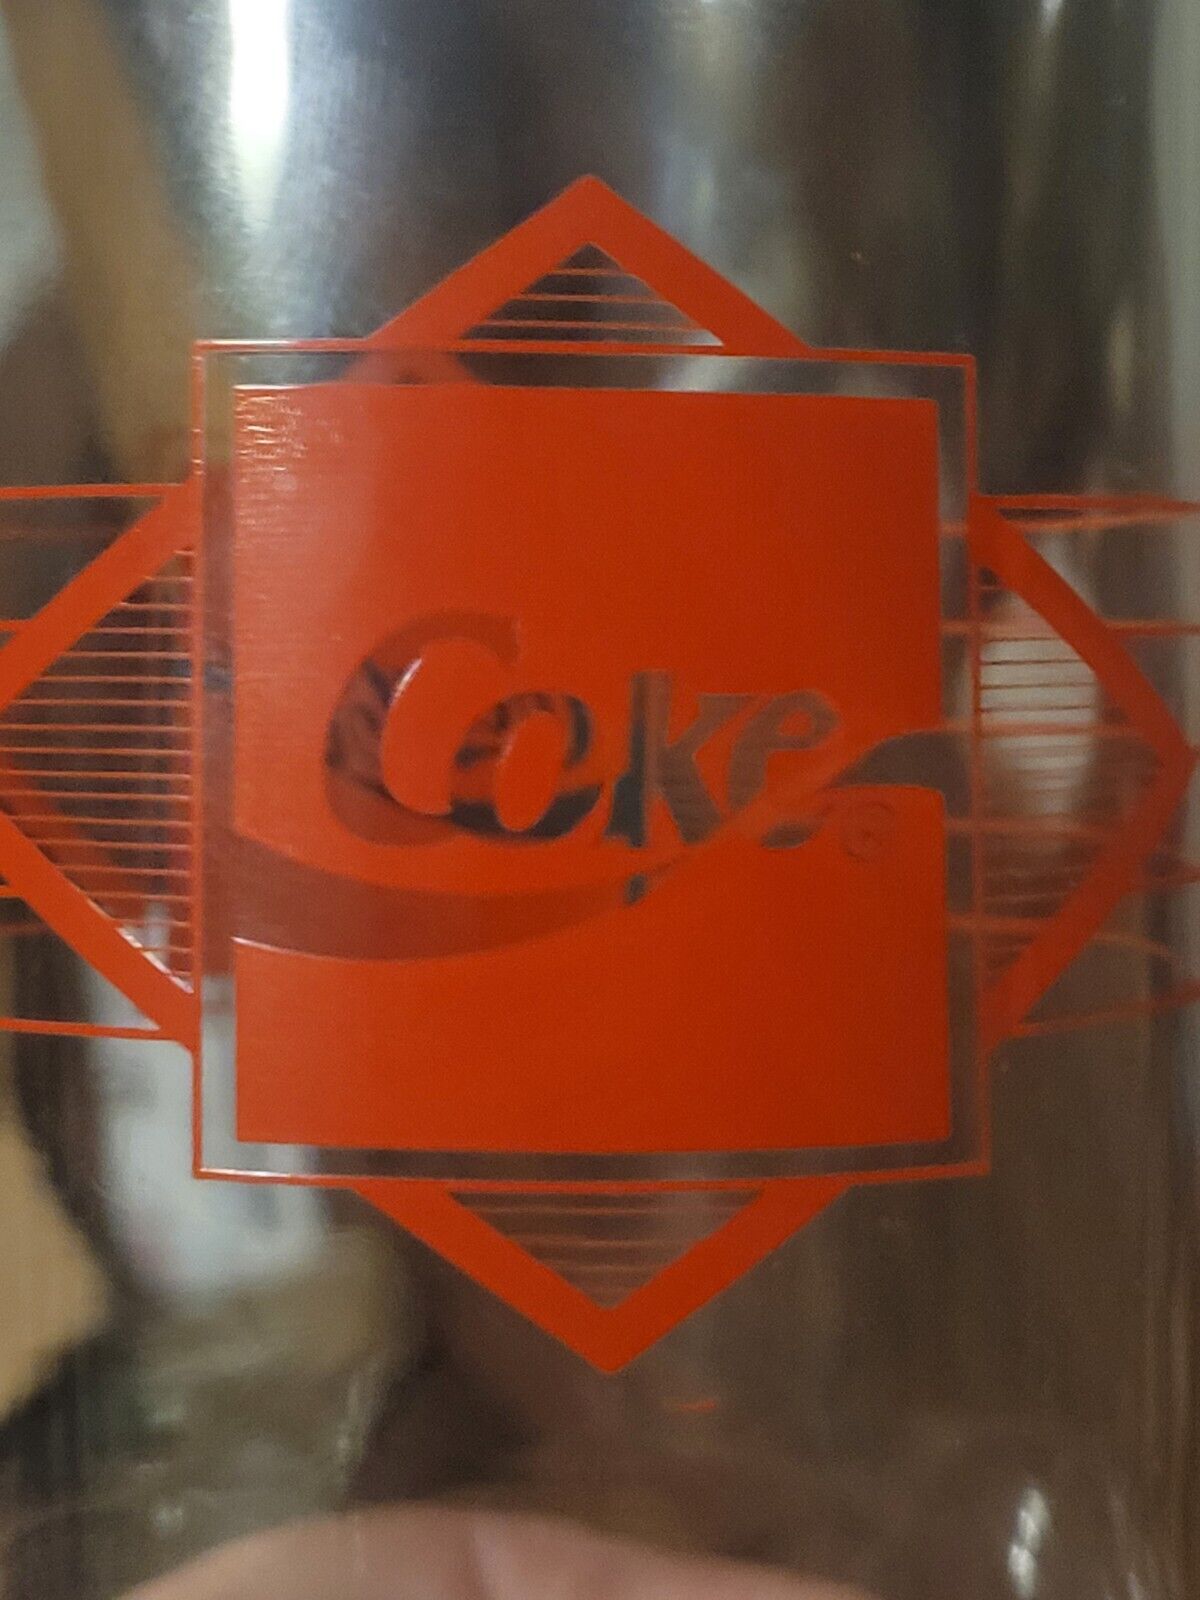 VINTAGE Libbey Crisa Coca Cola Coke Glass 16 oz. Rare Red Diamond Single Glass